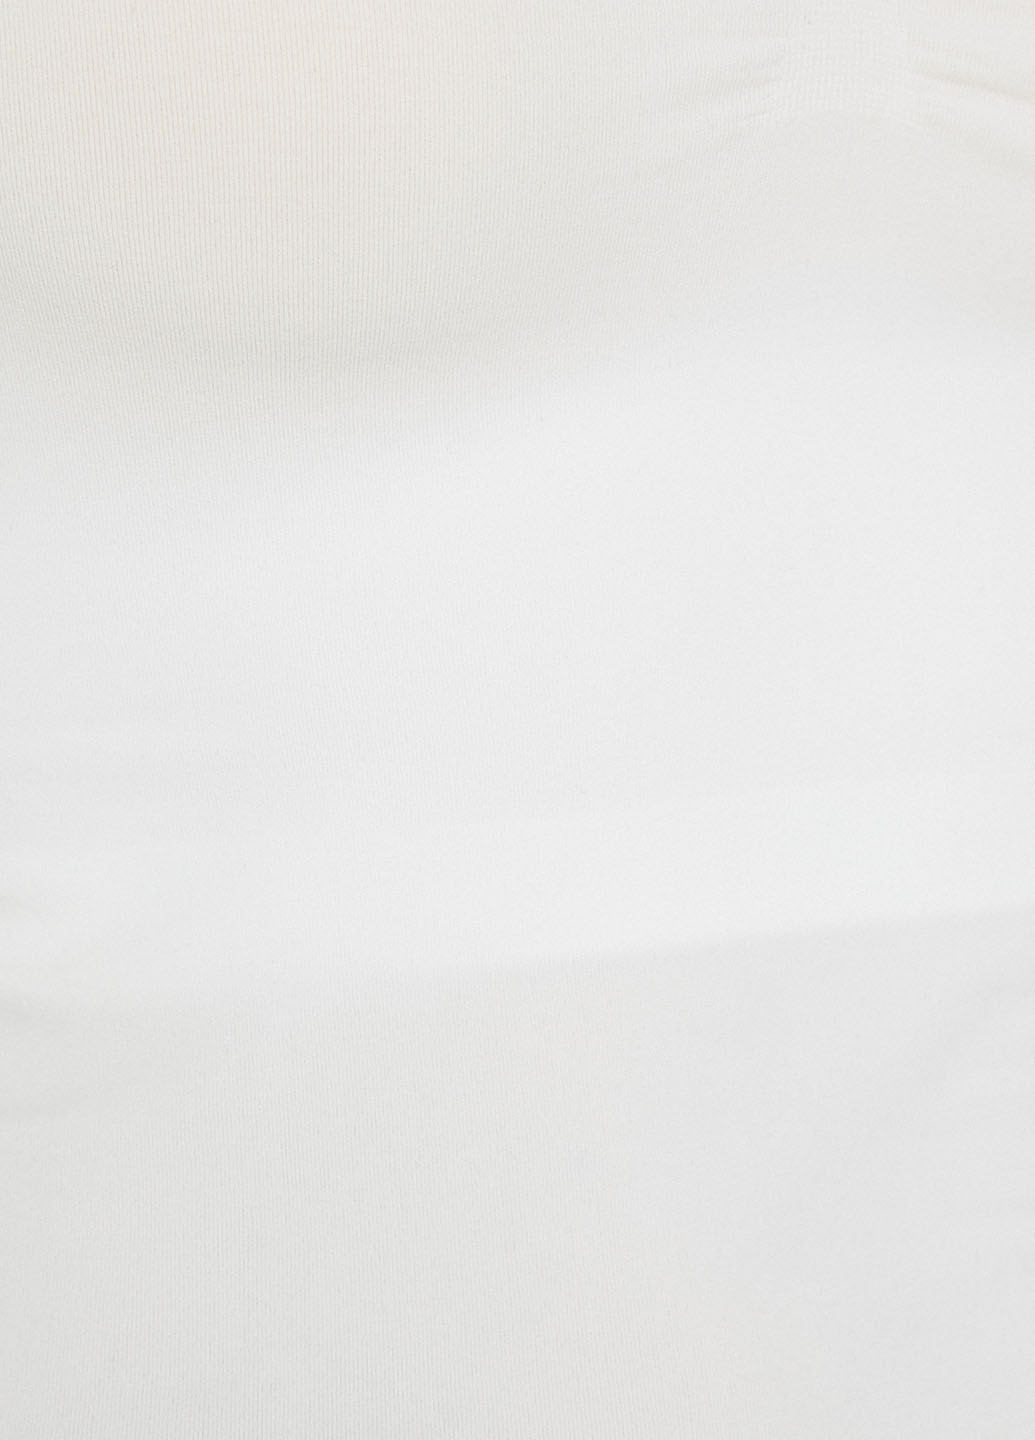 Майка KOTON однотонная белая кэжуал трикотаж, полиамид